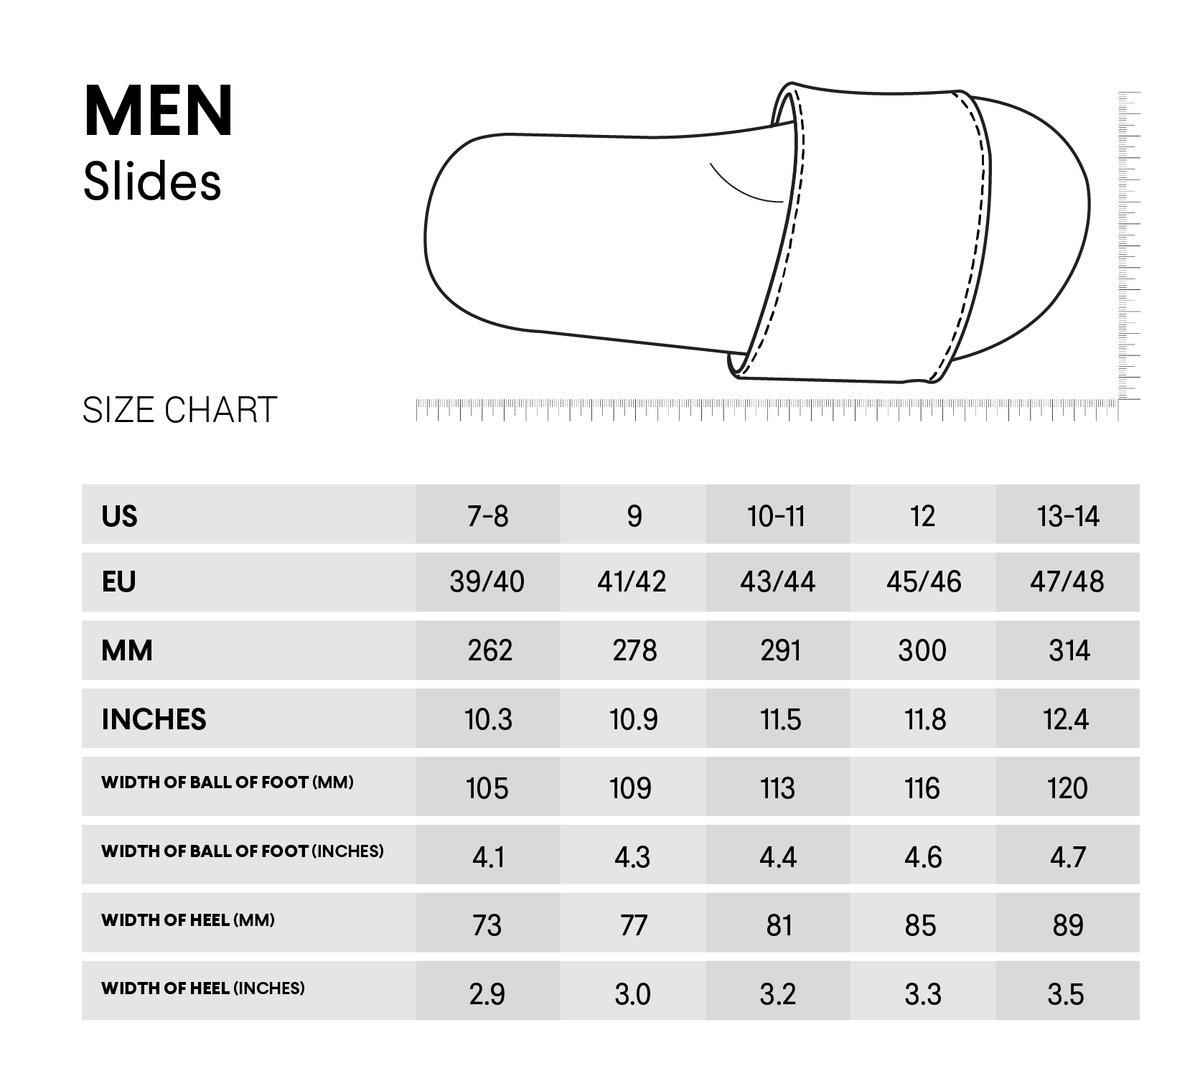 Men’s Slide - Shore/Shore Light by Indosole